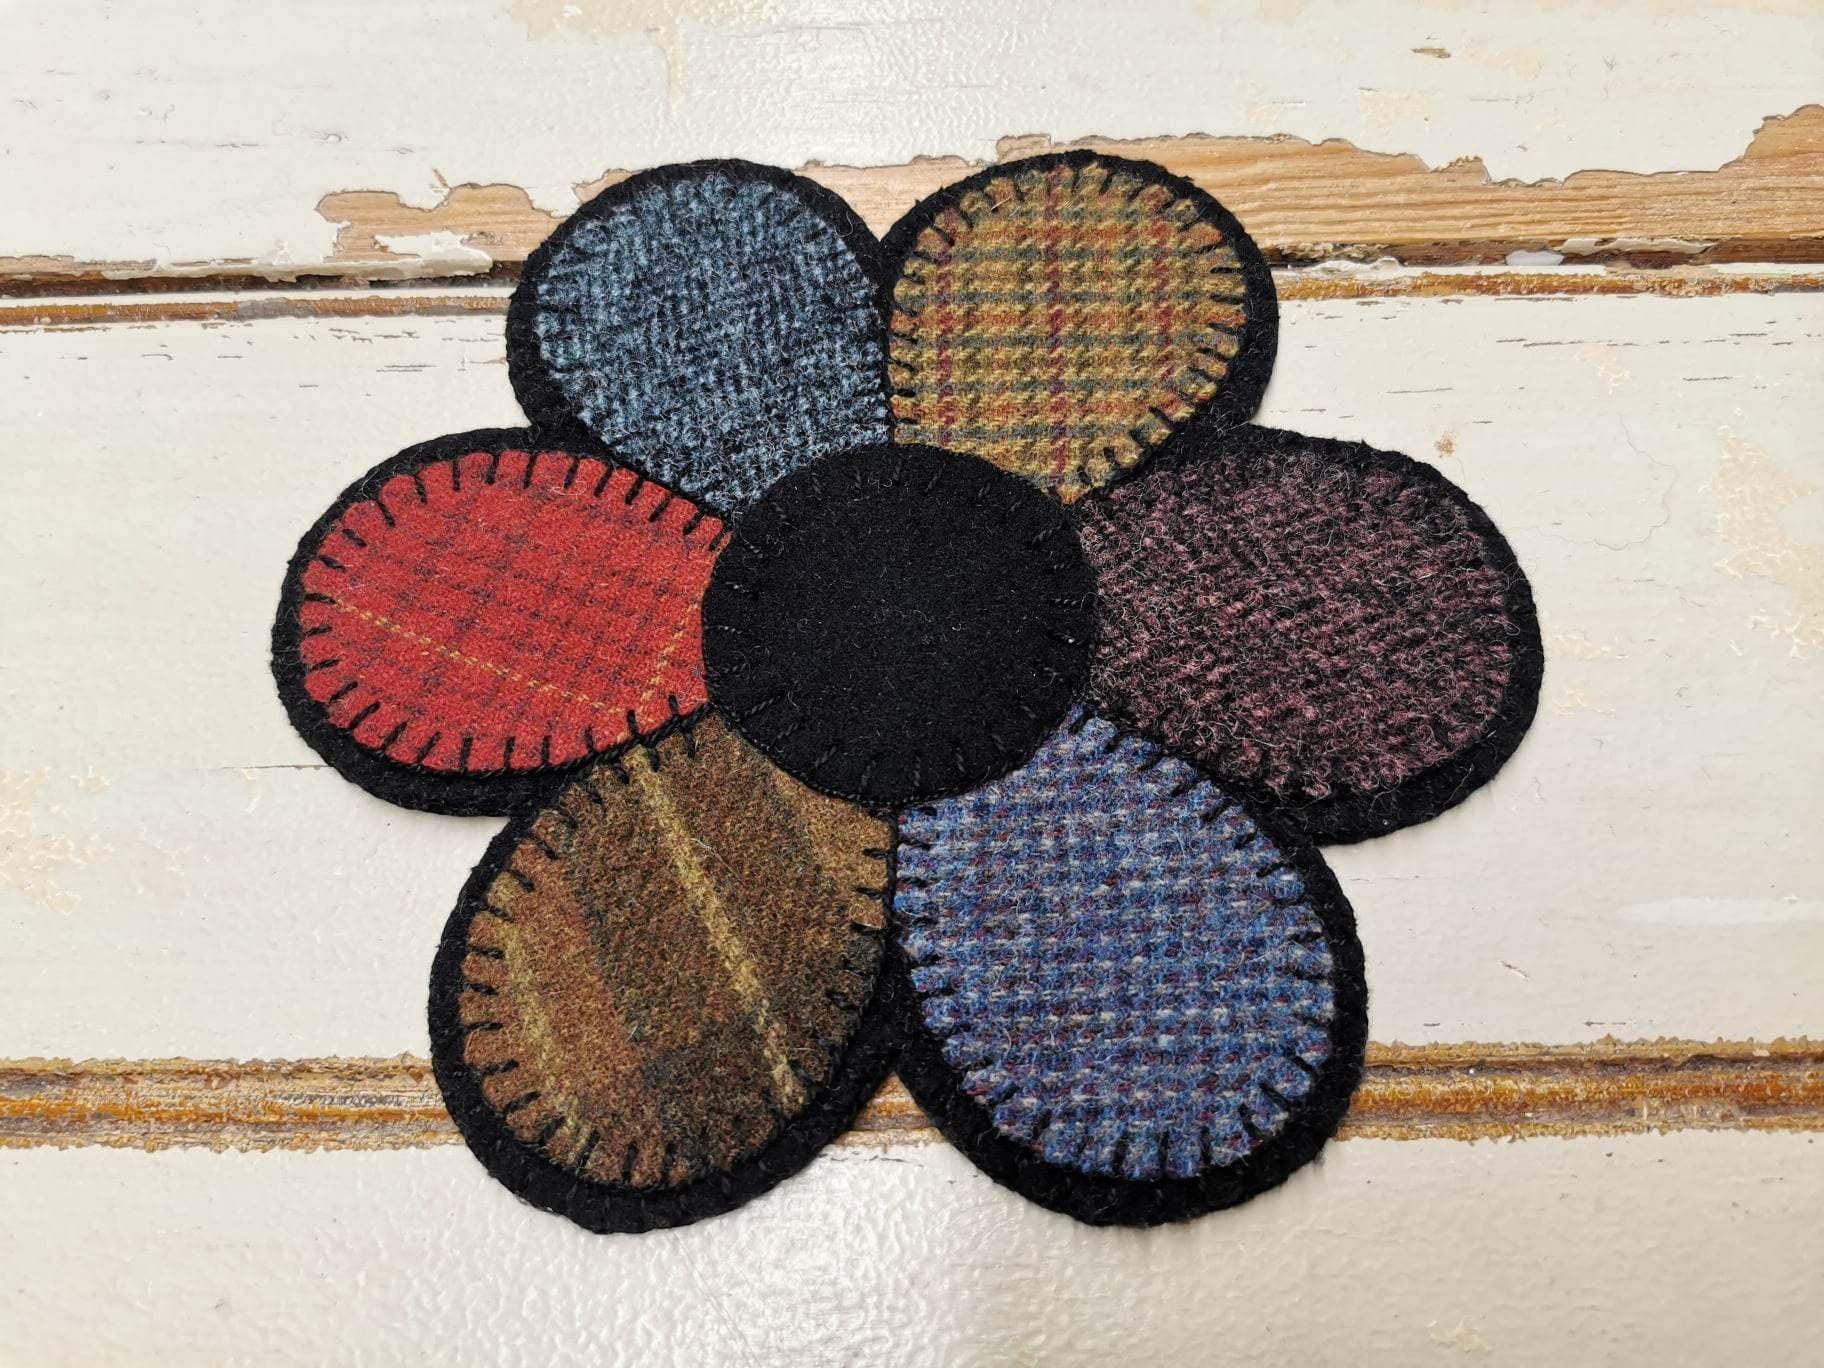 WOOL FLOWER MAT Paper Pattern - All About Ewe Wool Shop